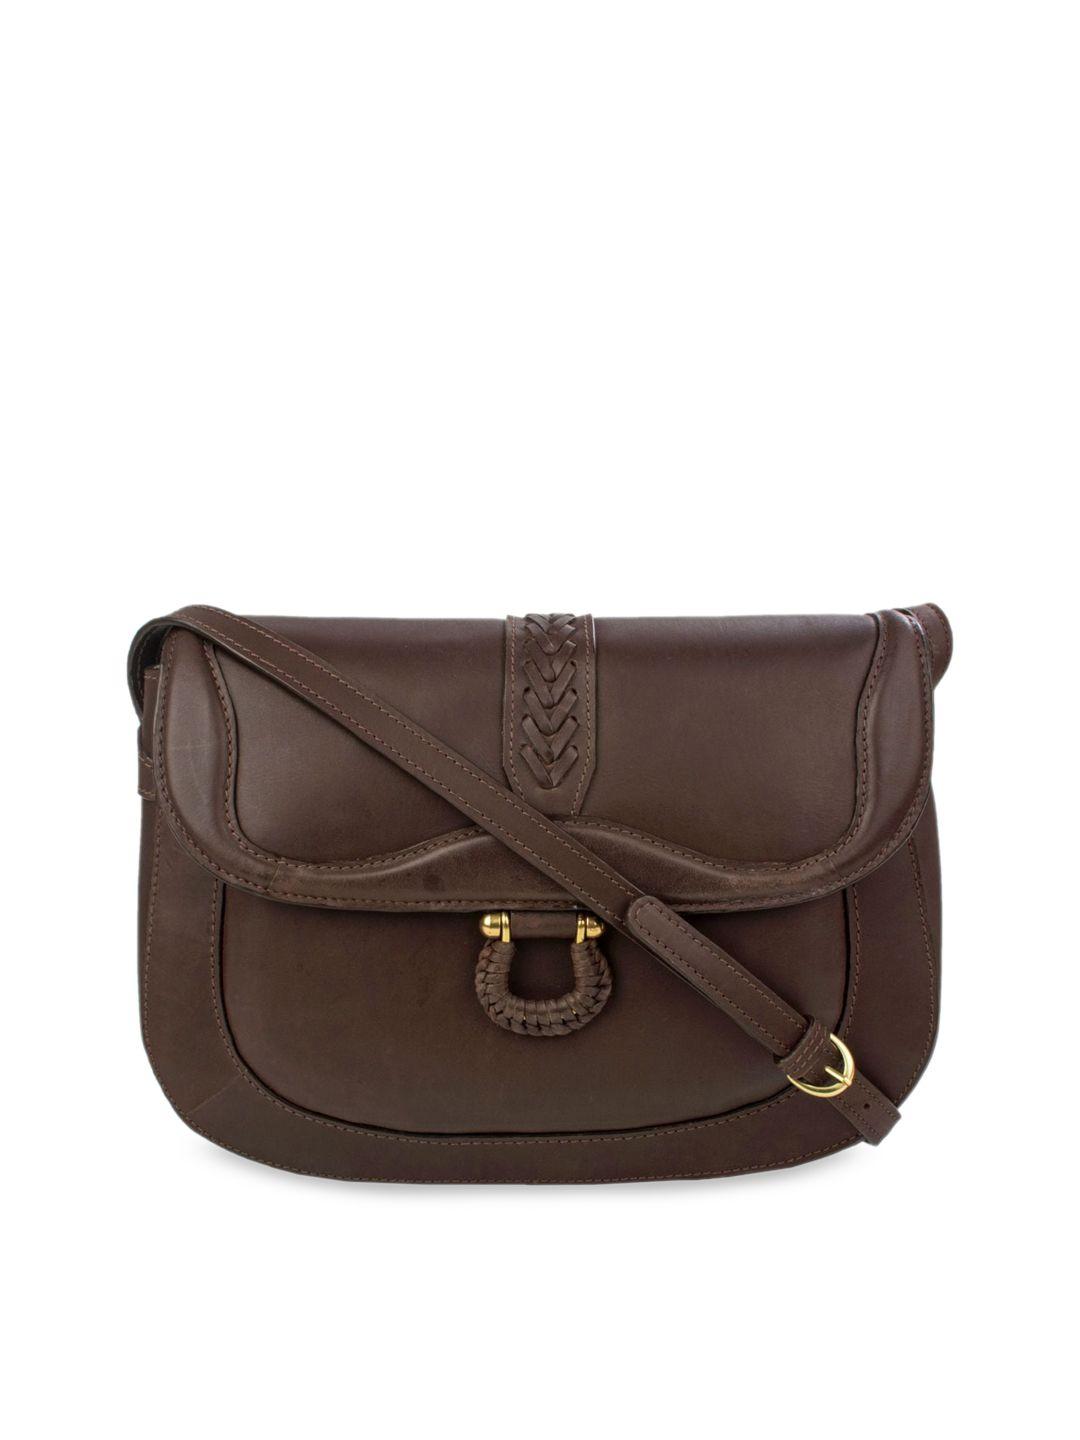 hidesign brown solid sling bag